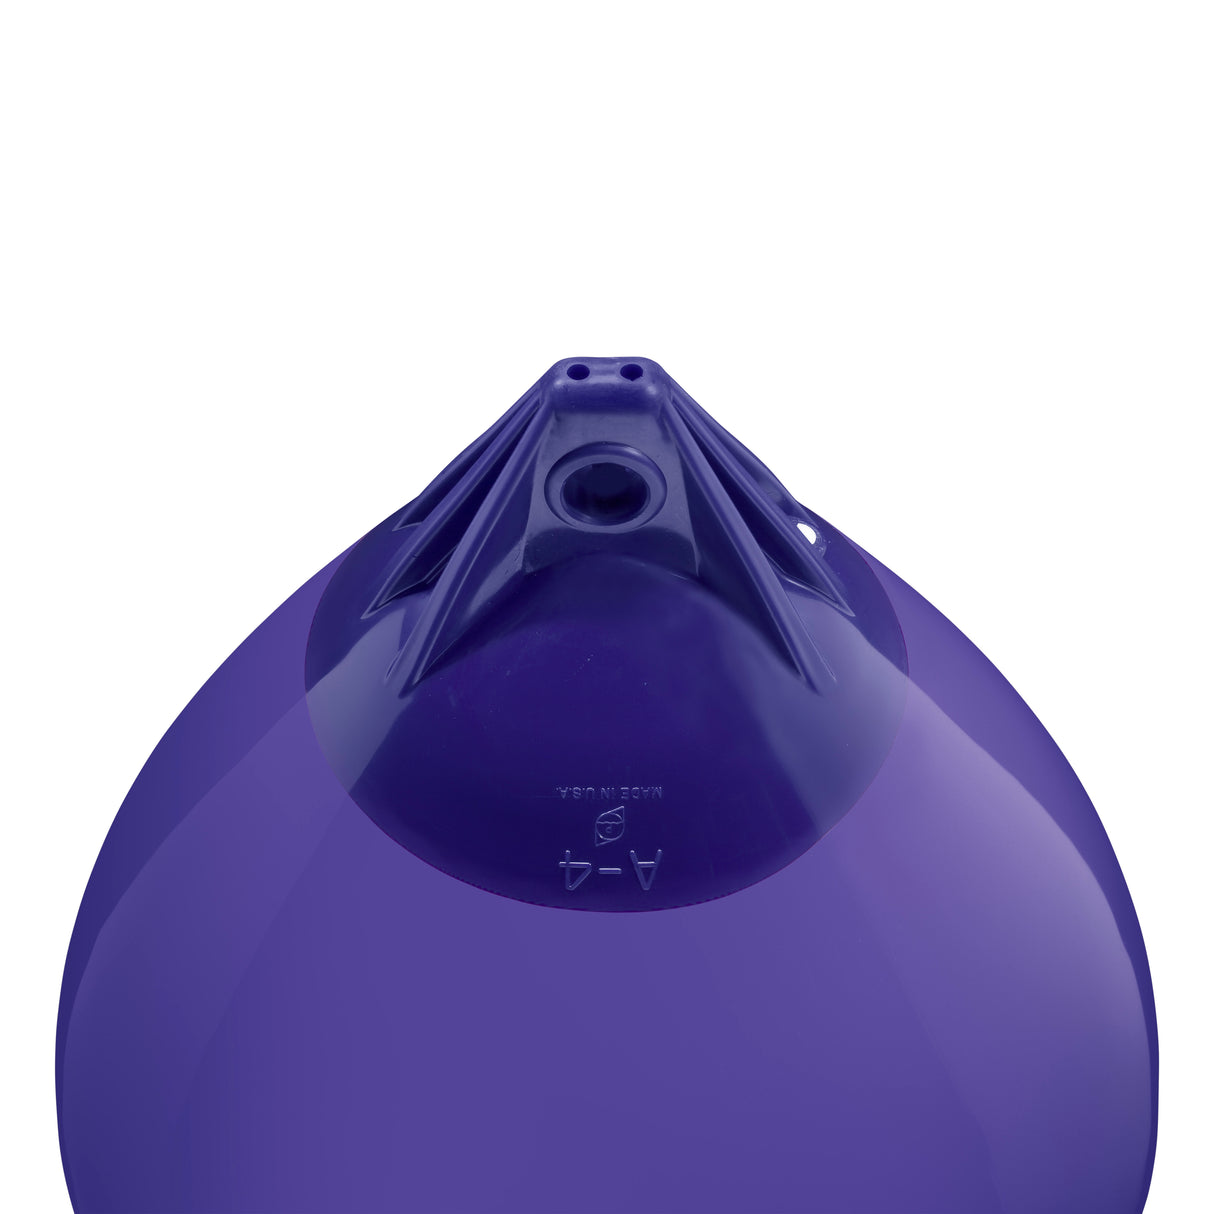 Purple inflatable buoy, Polyform A-4 angled shot